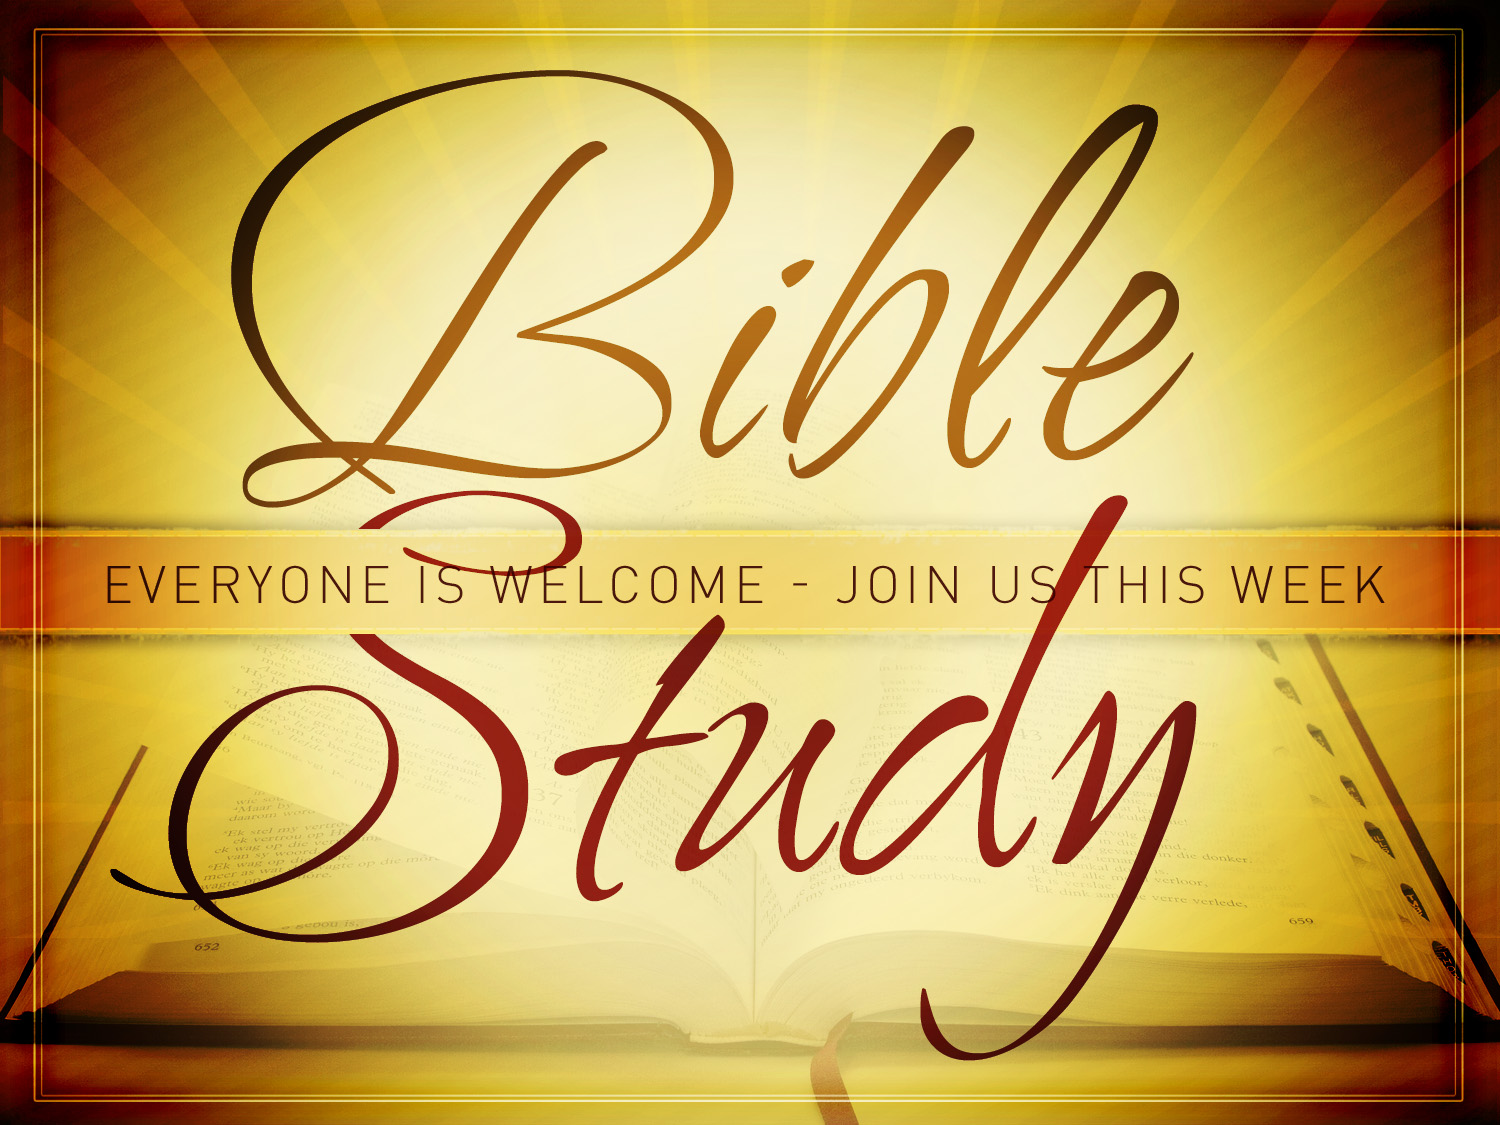 Wednesday Night Bible Study